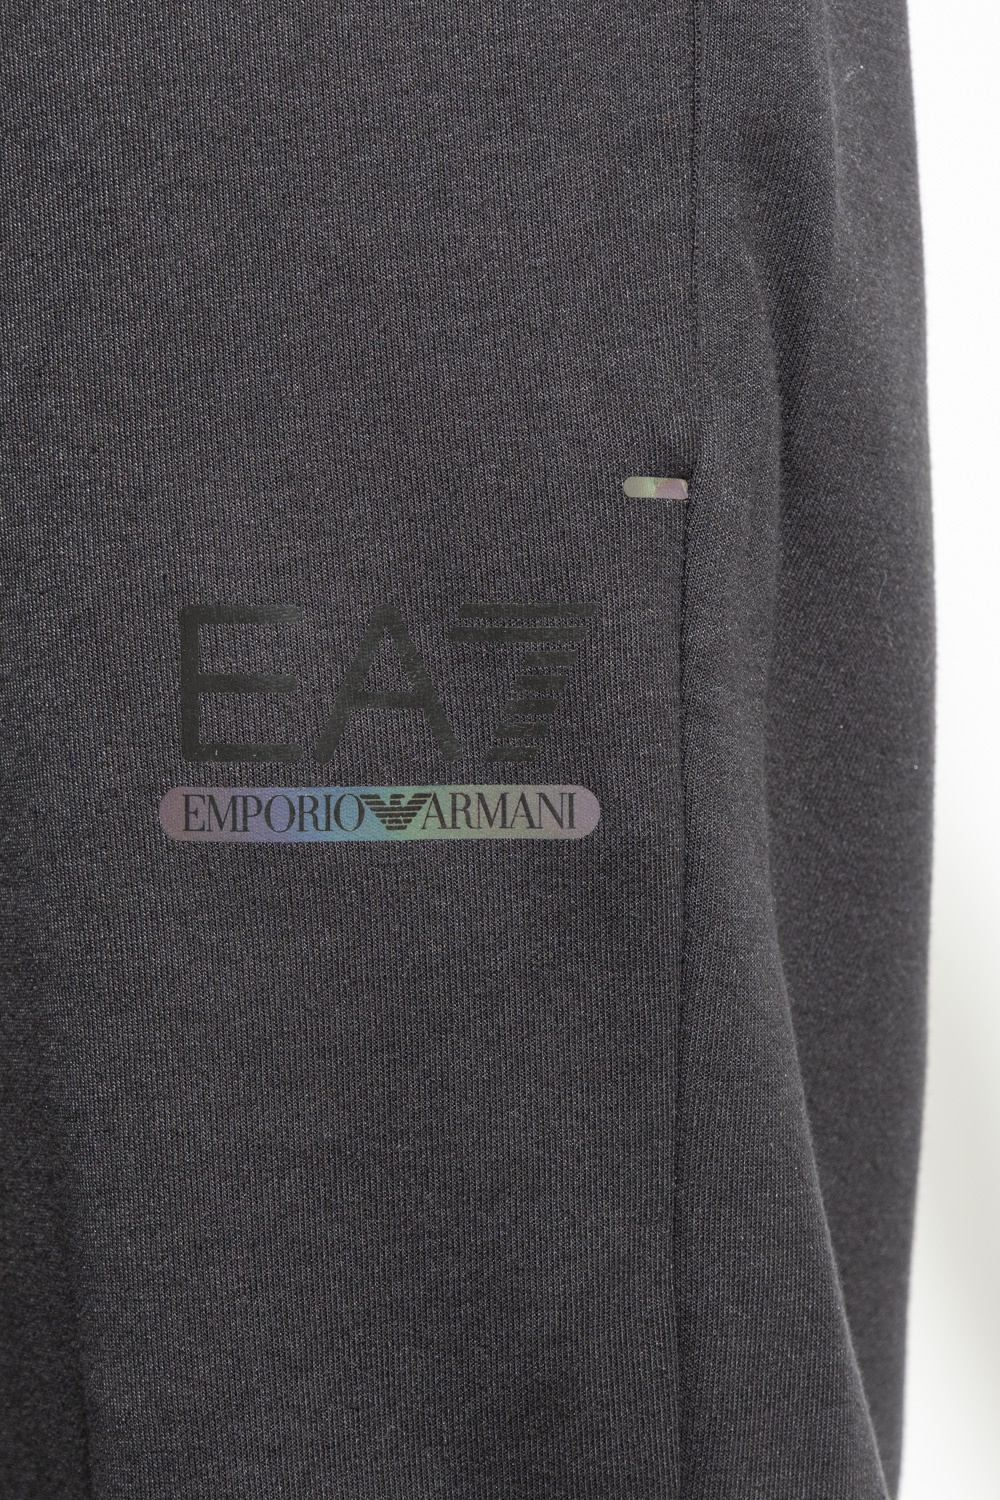 EA7 Emporio Armani Sweatpants with logo